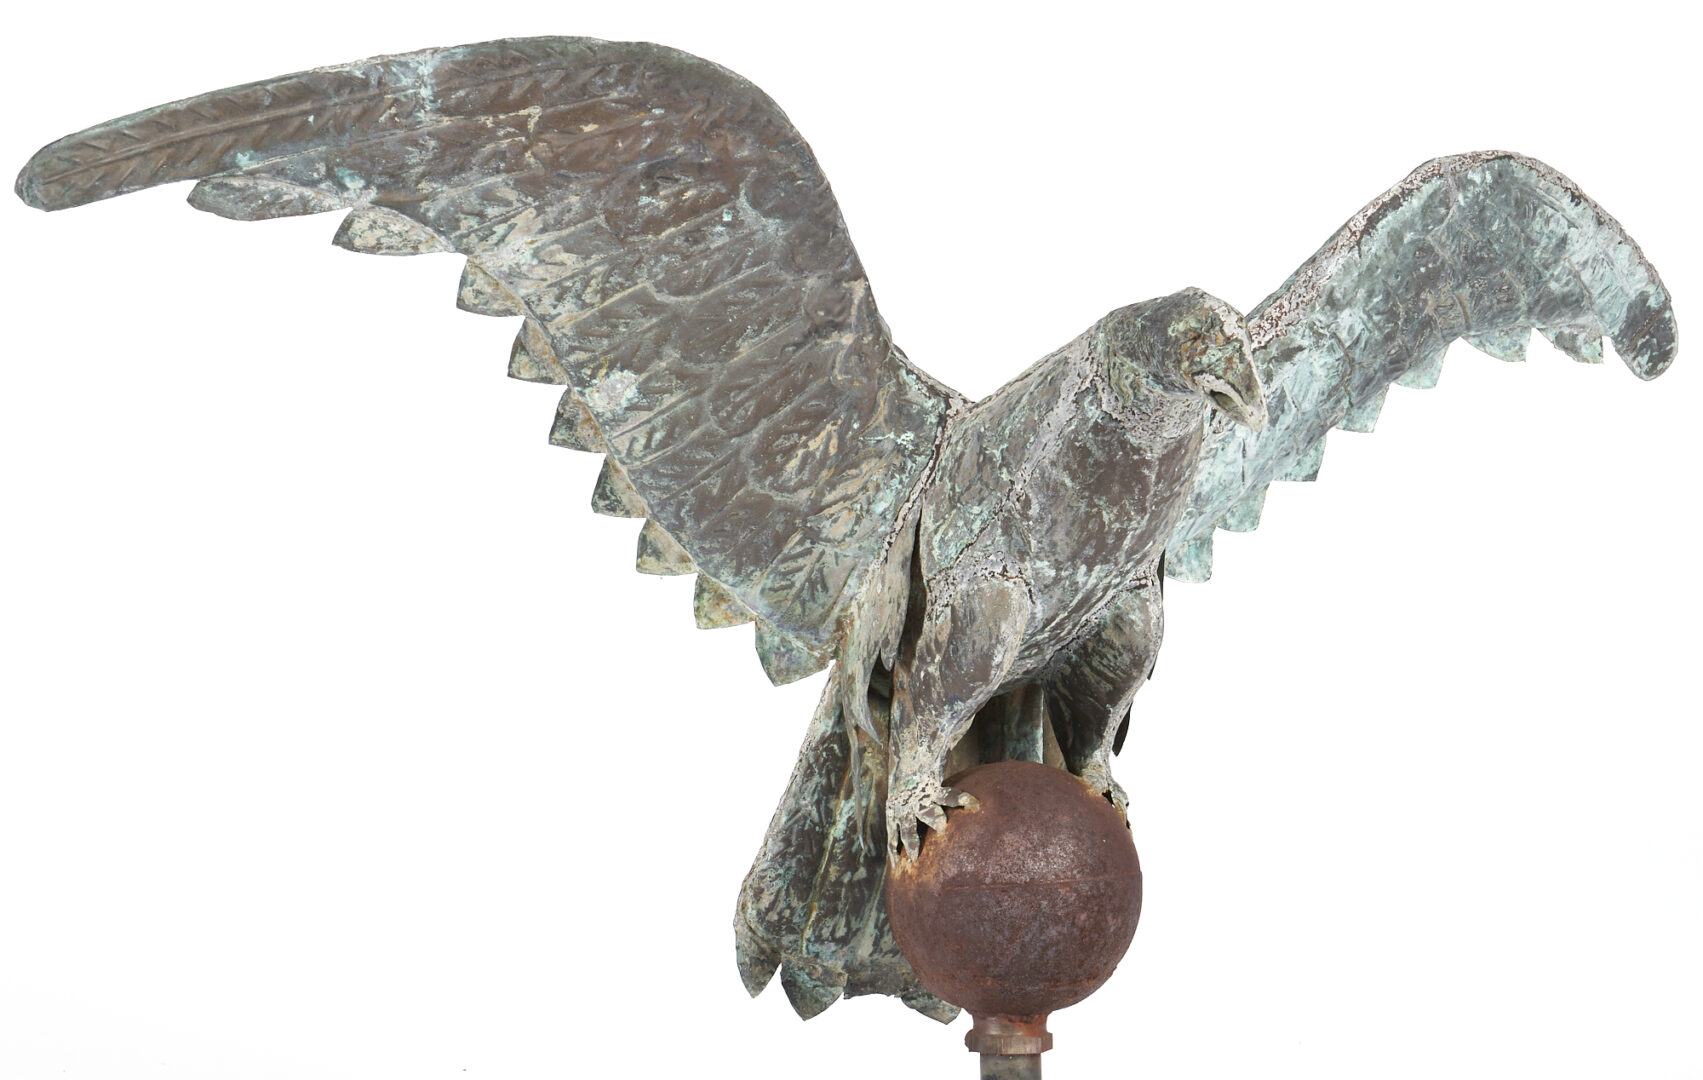 Lot 174: Large Copper Eagle on Sphere, Weathervane or Flag Pole Topper